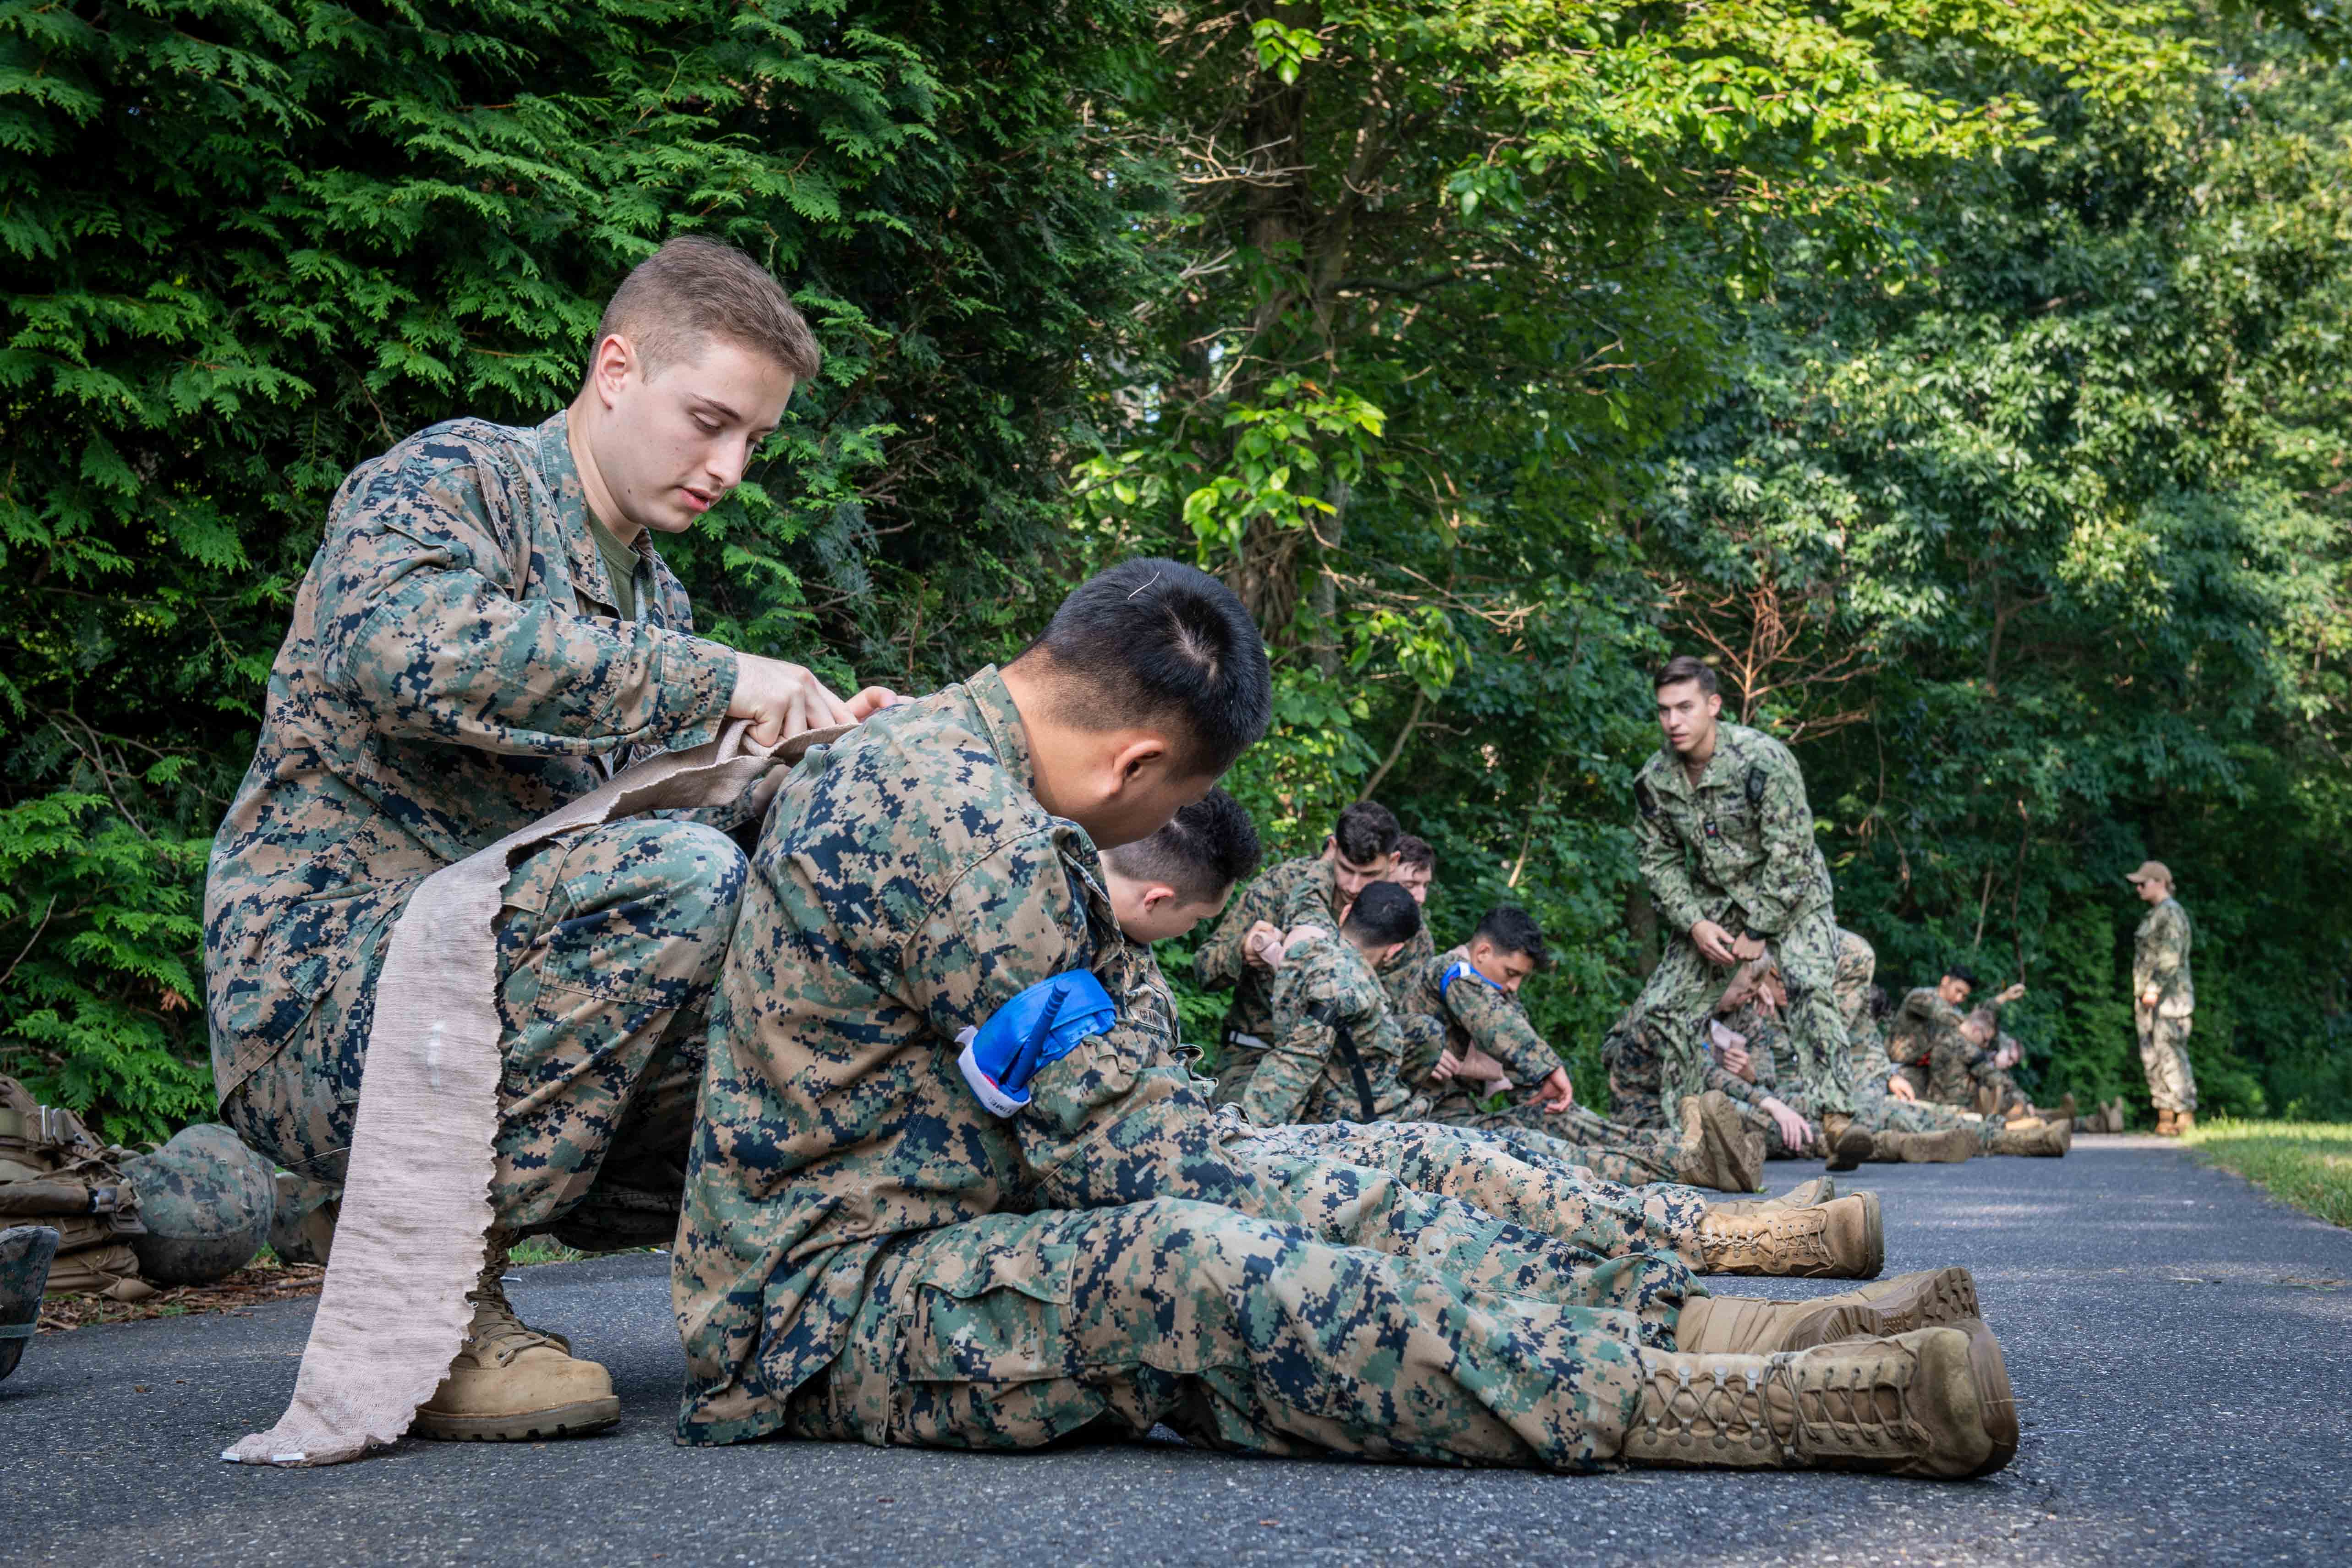 Camp David Marines Learn Lifesaving Skills > Navy Medicine > News Article